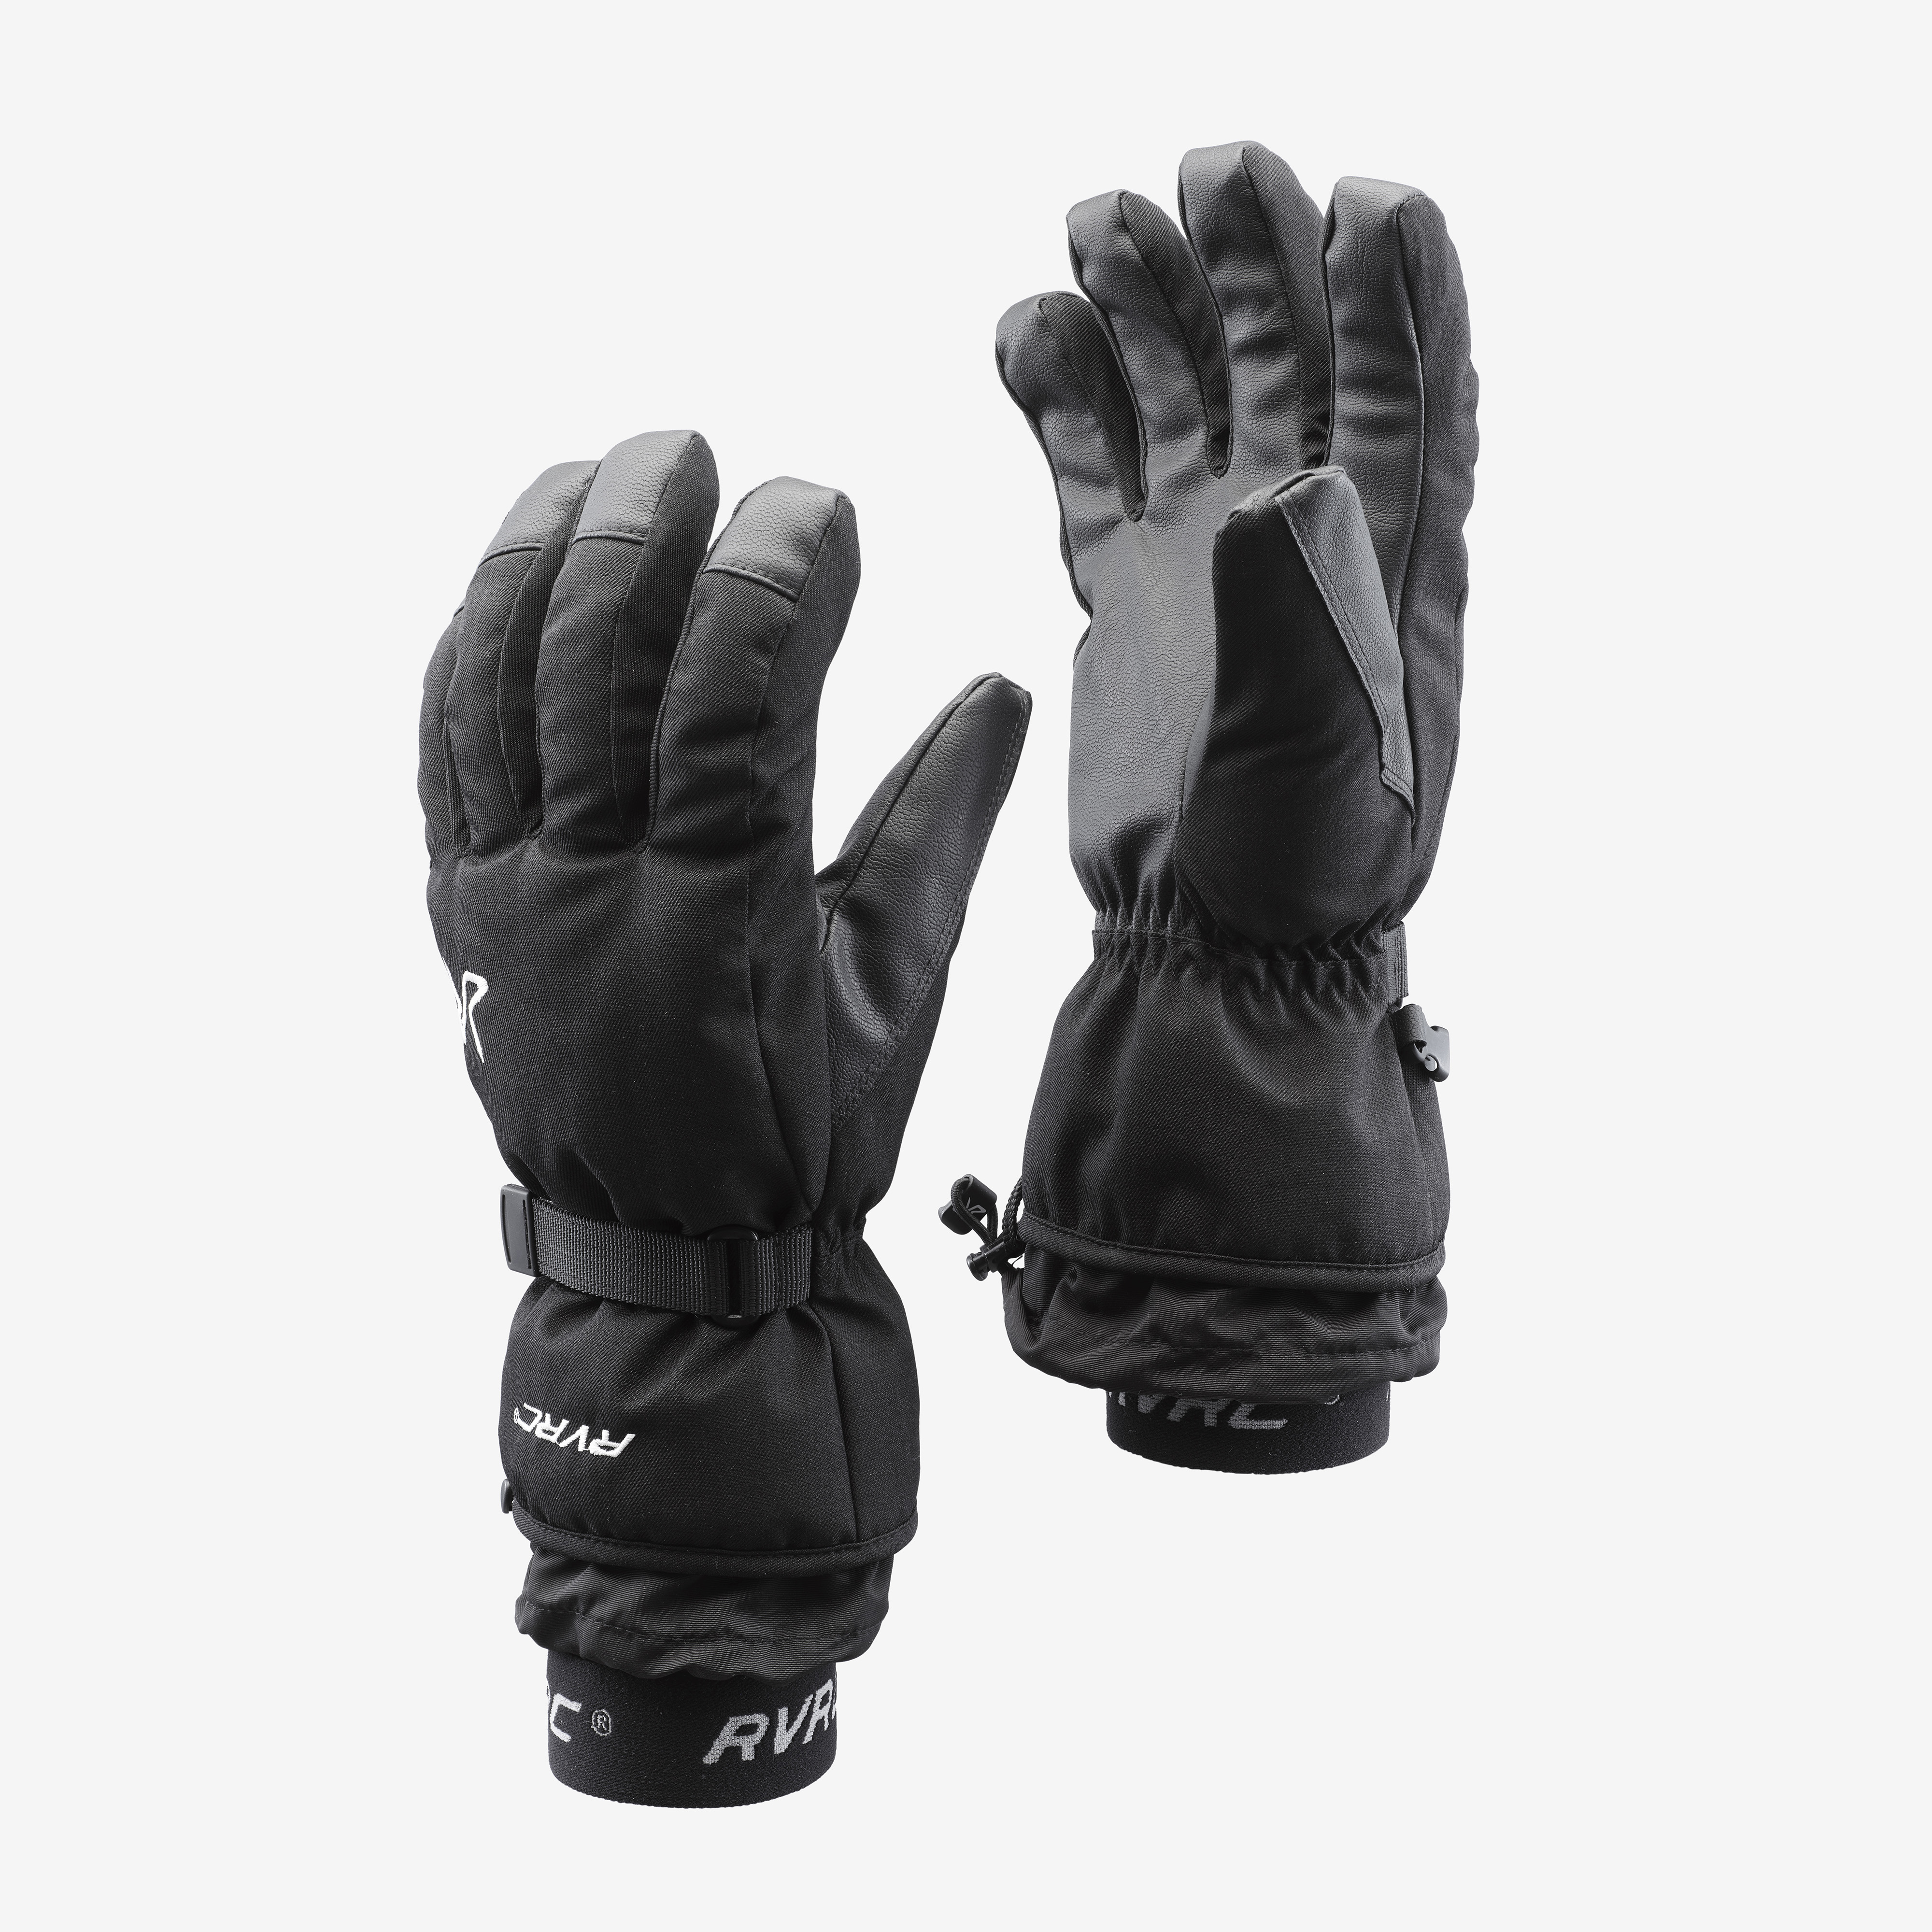 Cabin Ski Glove Unisex Black, Storlek:G11 - Accessoarer > Handskar